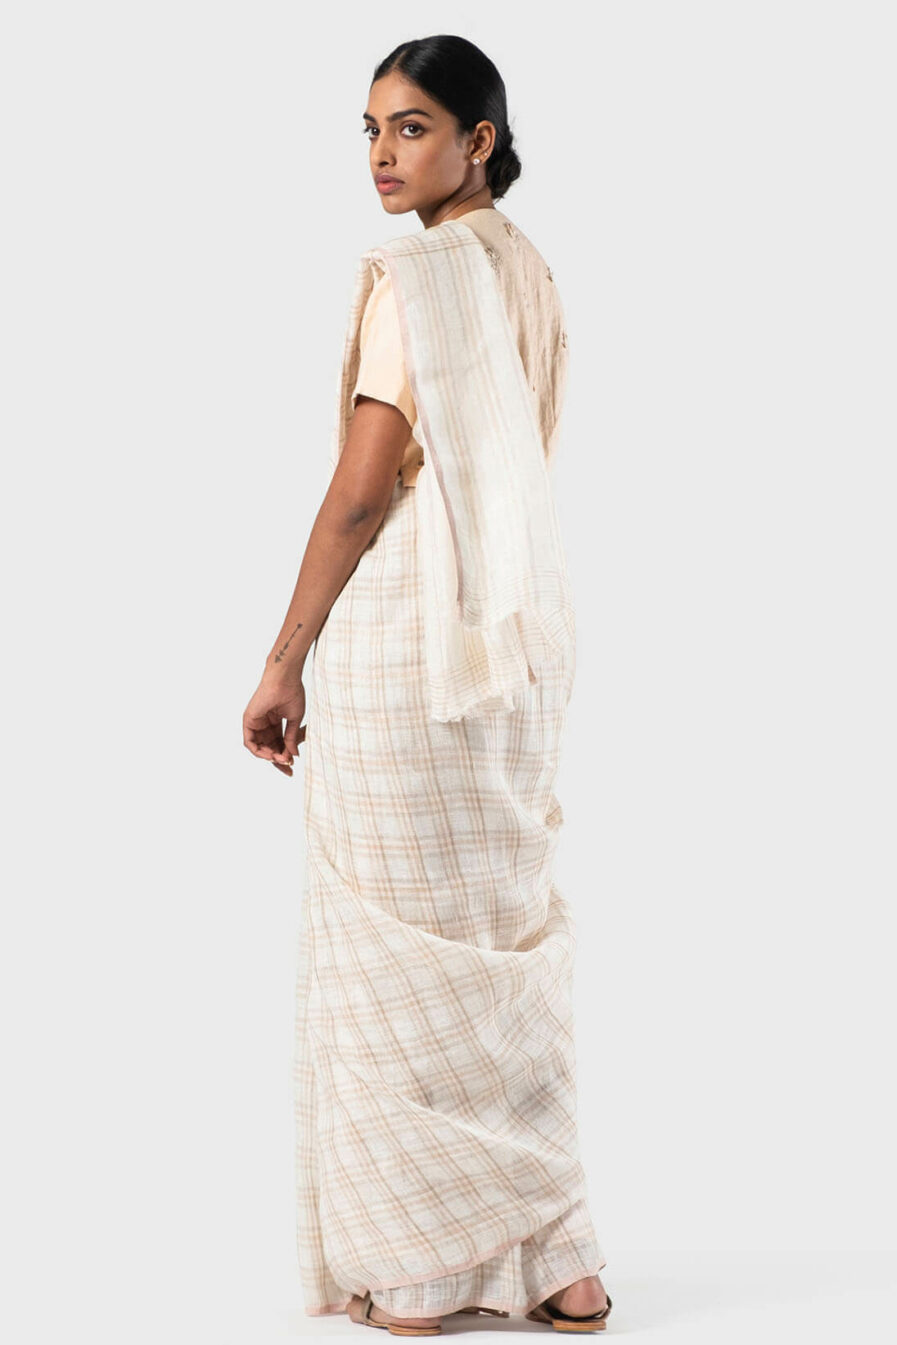 Anavila Ivory Summer plaid sari